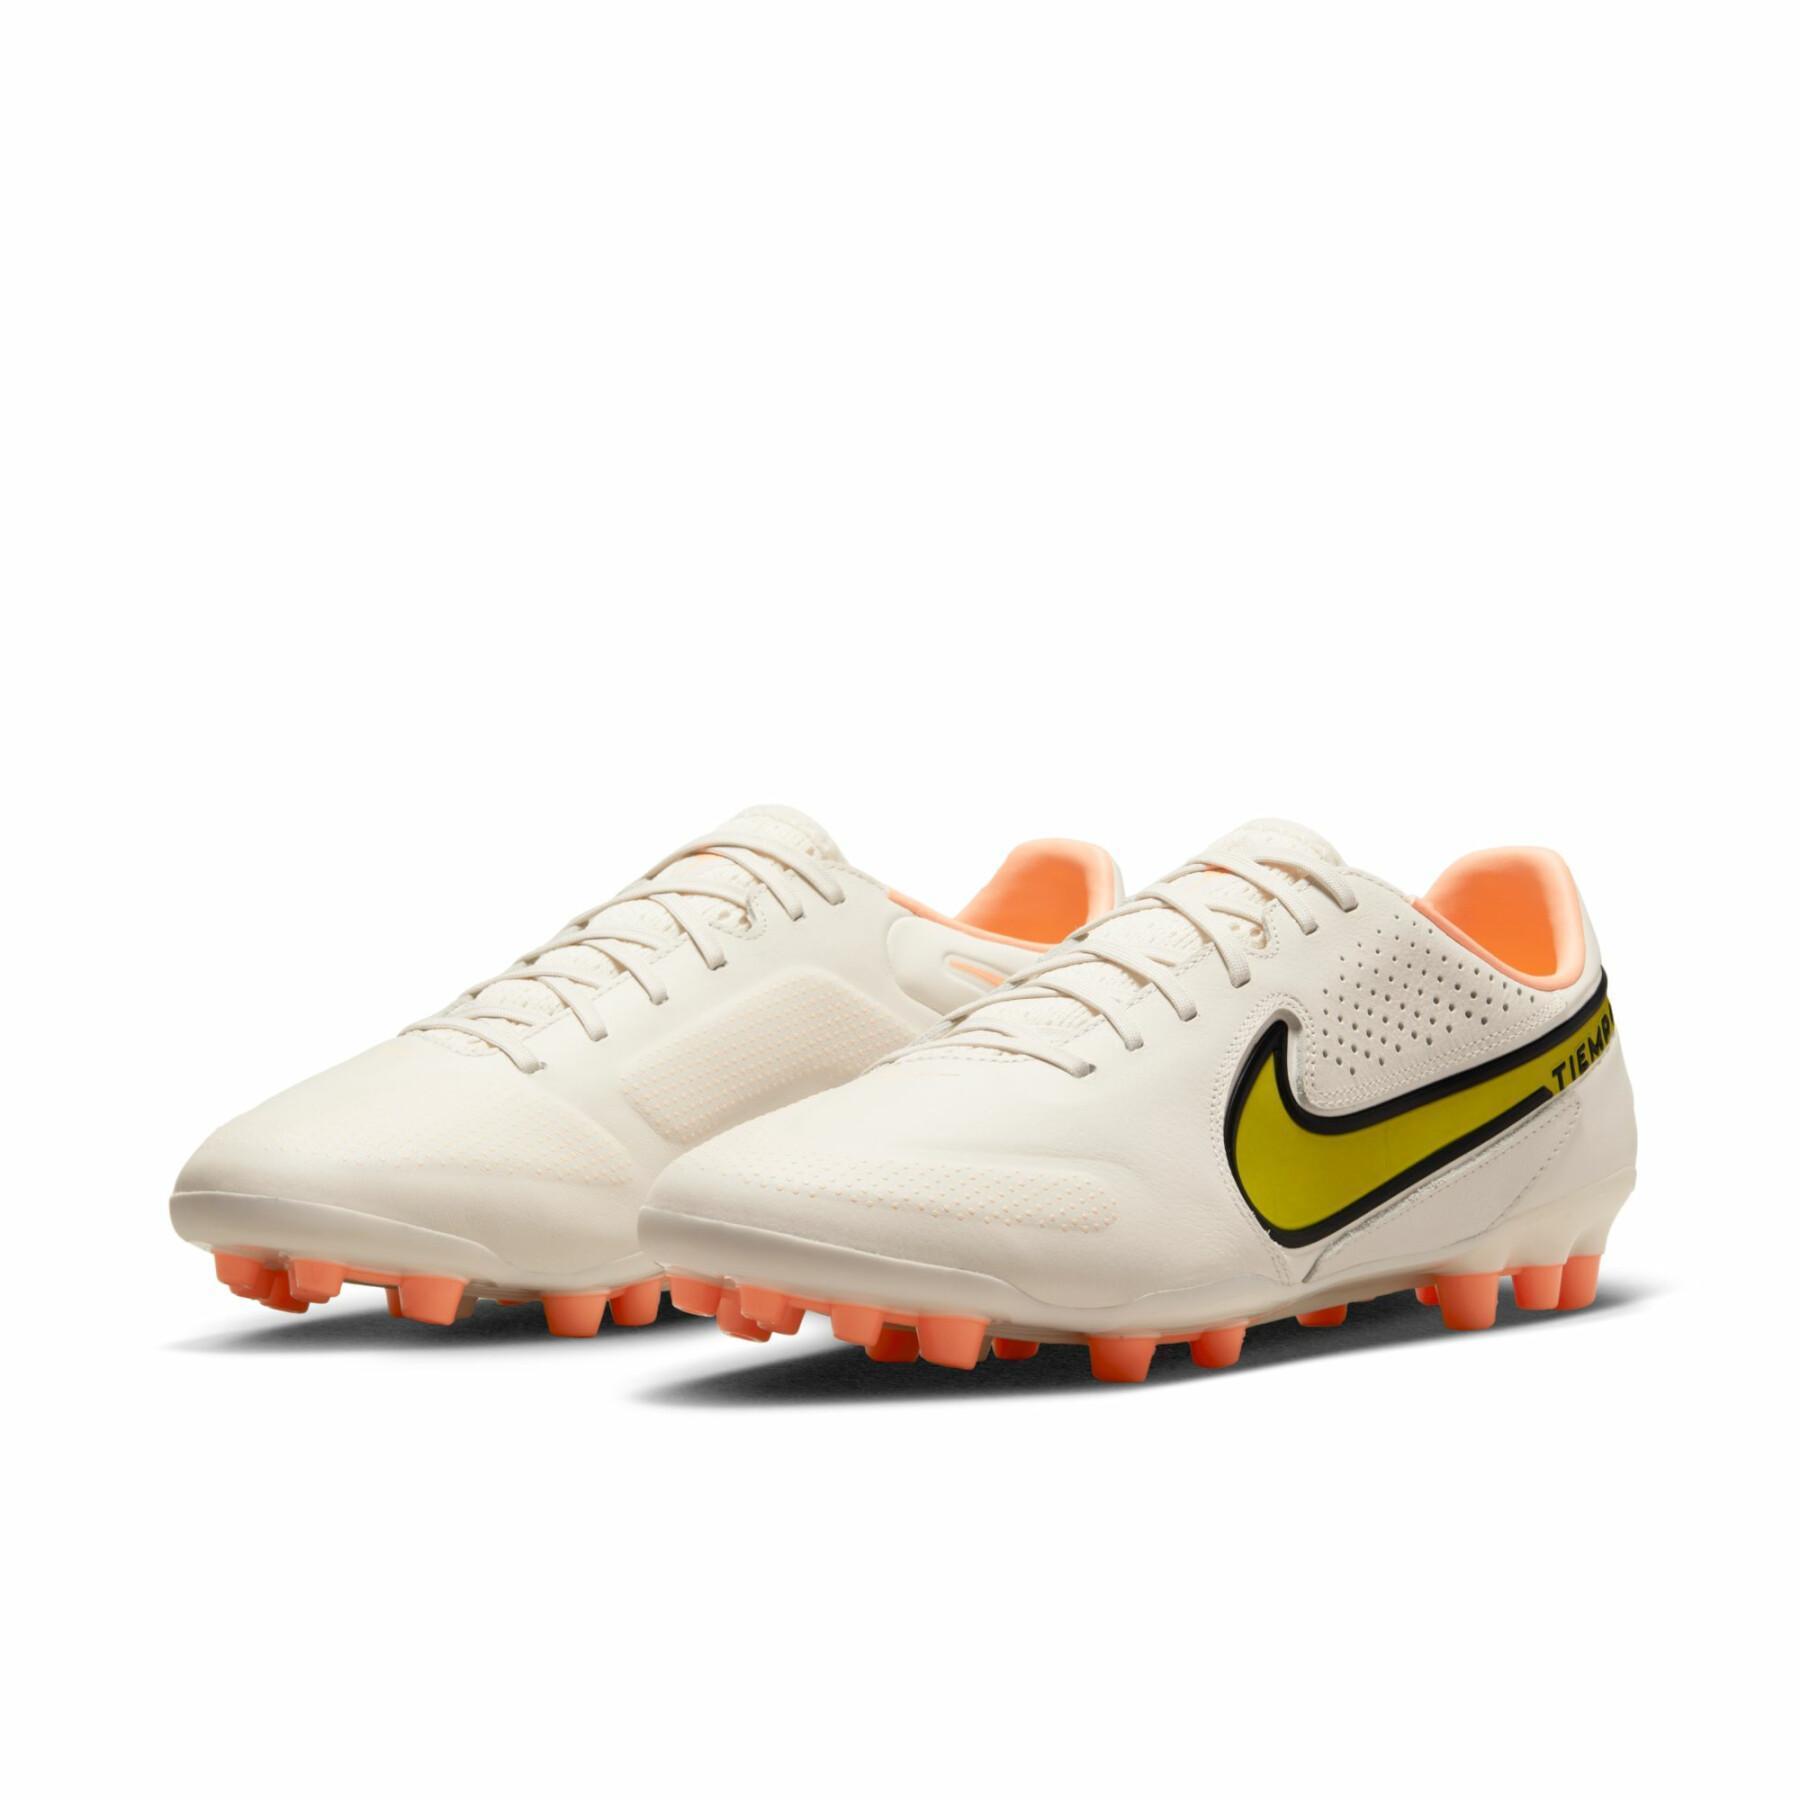 Soccer shoes Nike Tiempo Legend 9 Pro AG-Pro - Lucent Pack